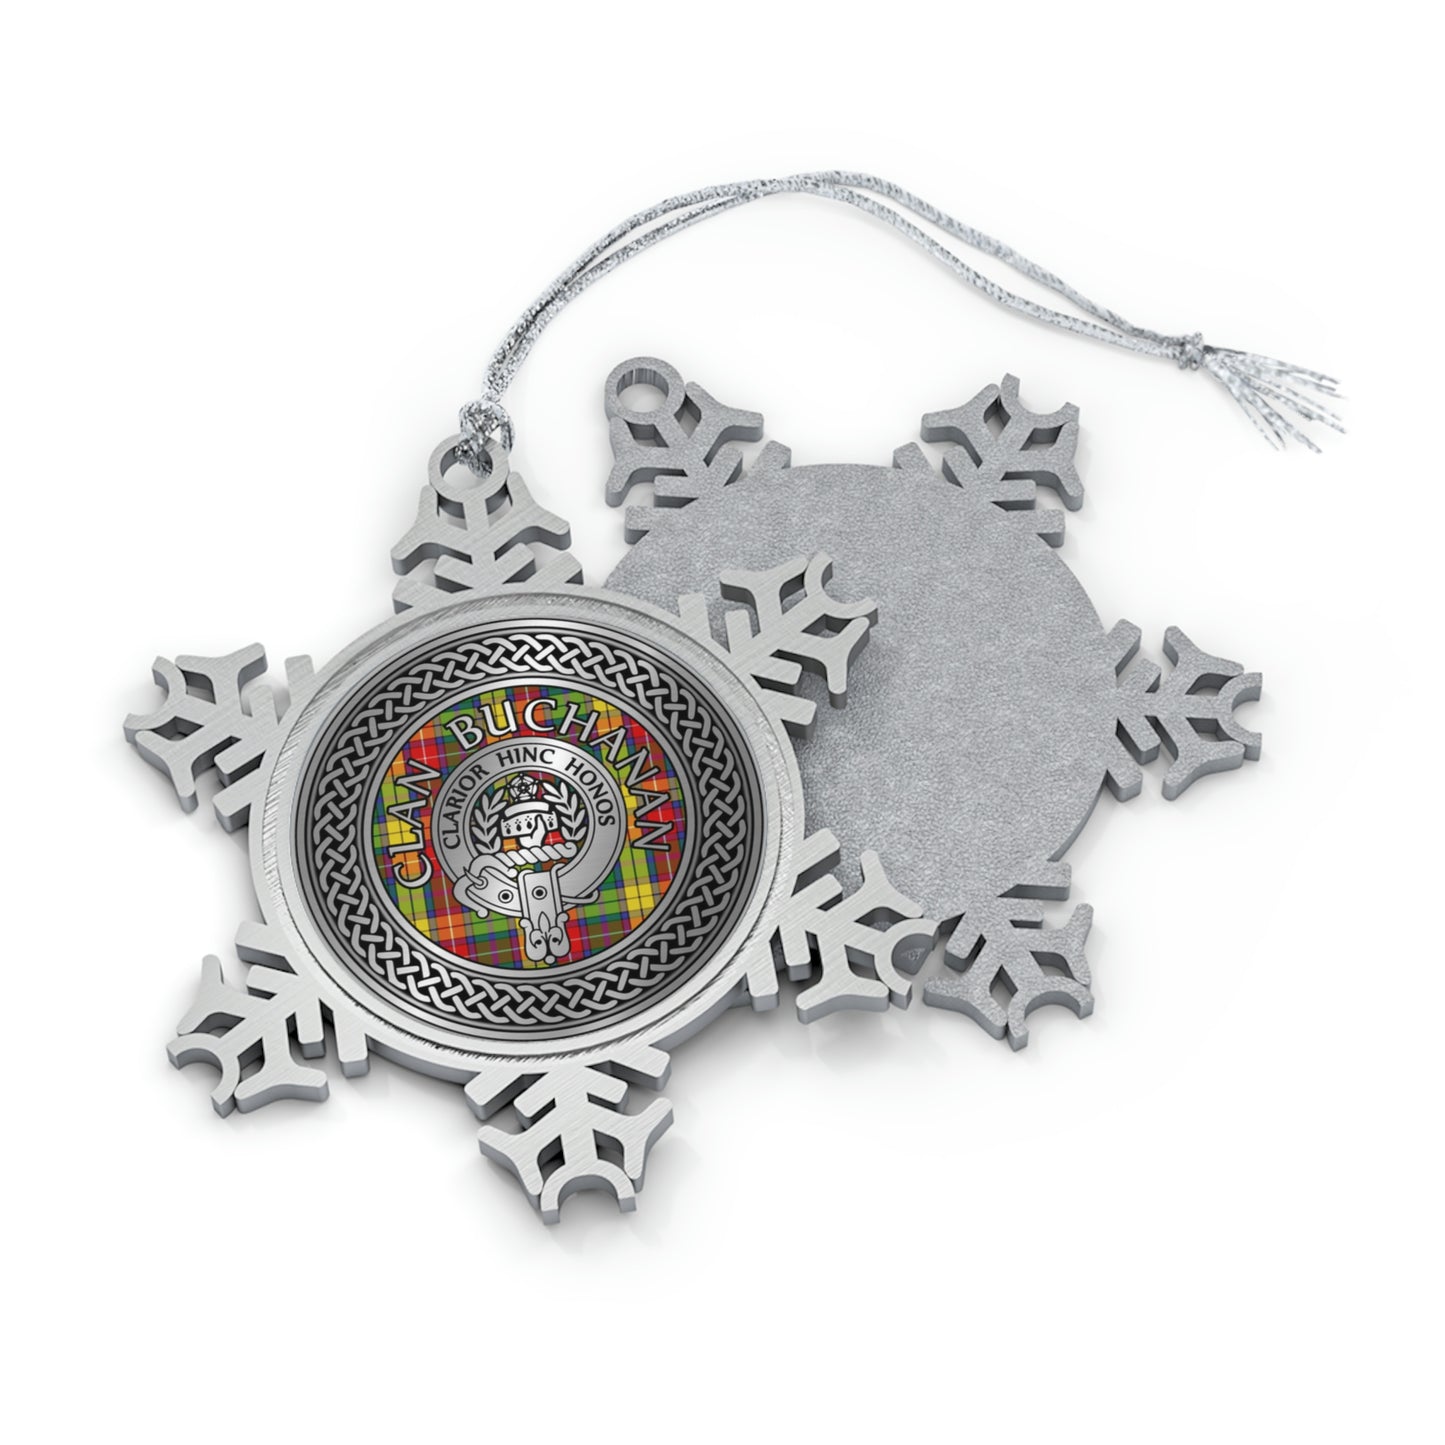 Clan Buchanan Crest & Tartan Knot Pewter Snowflake Ornament